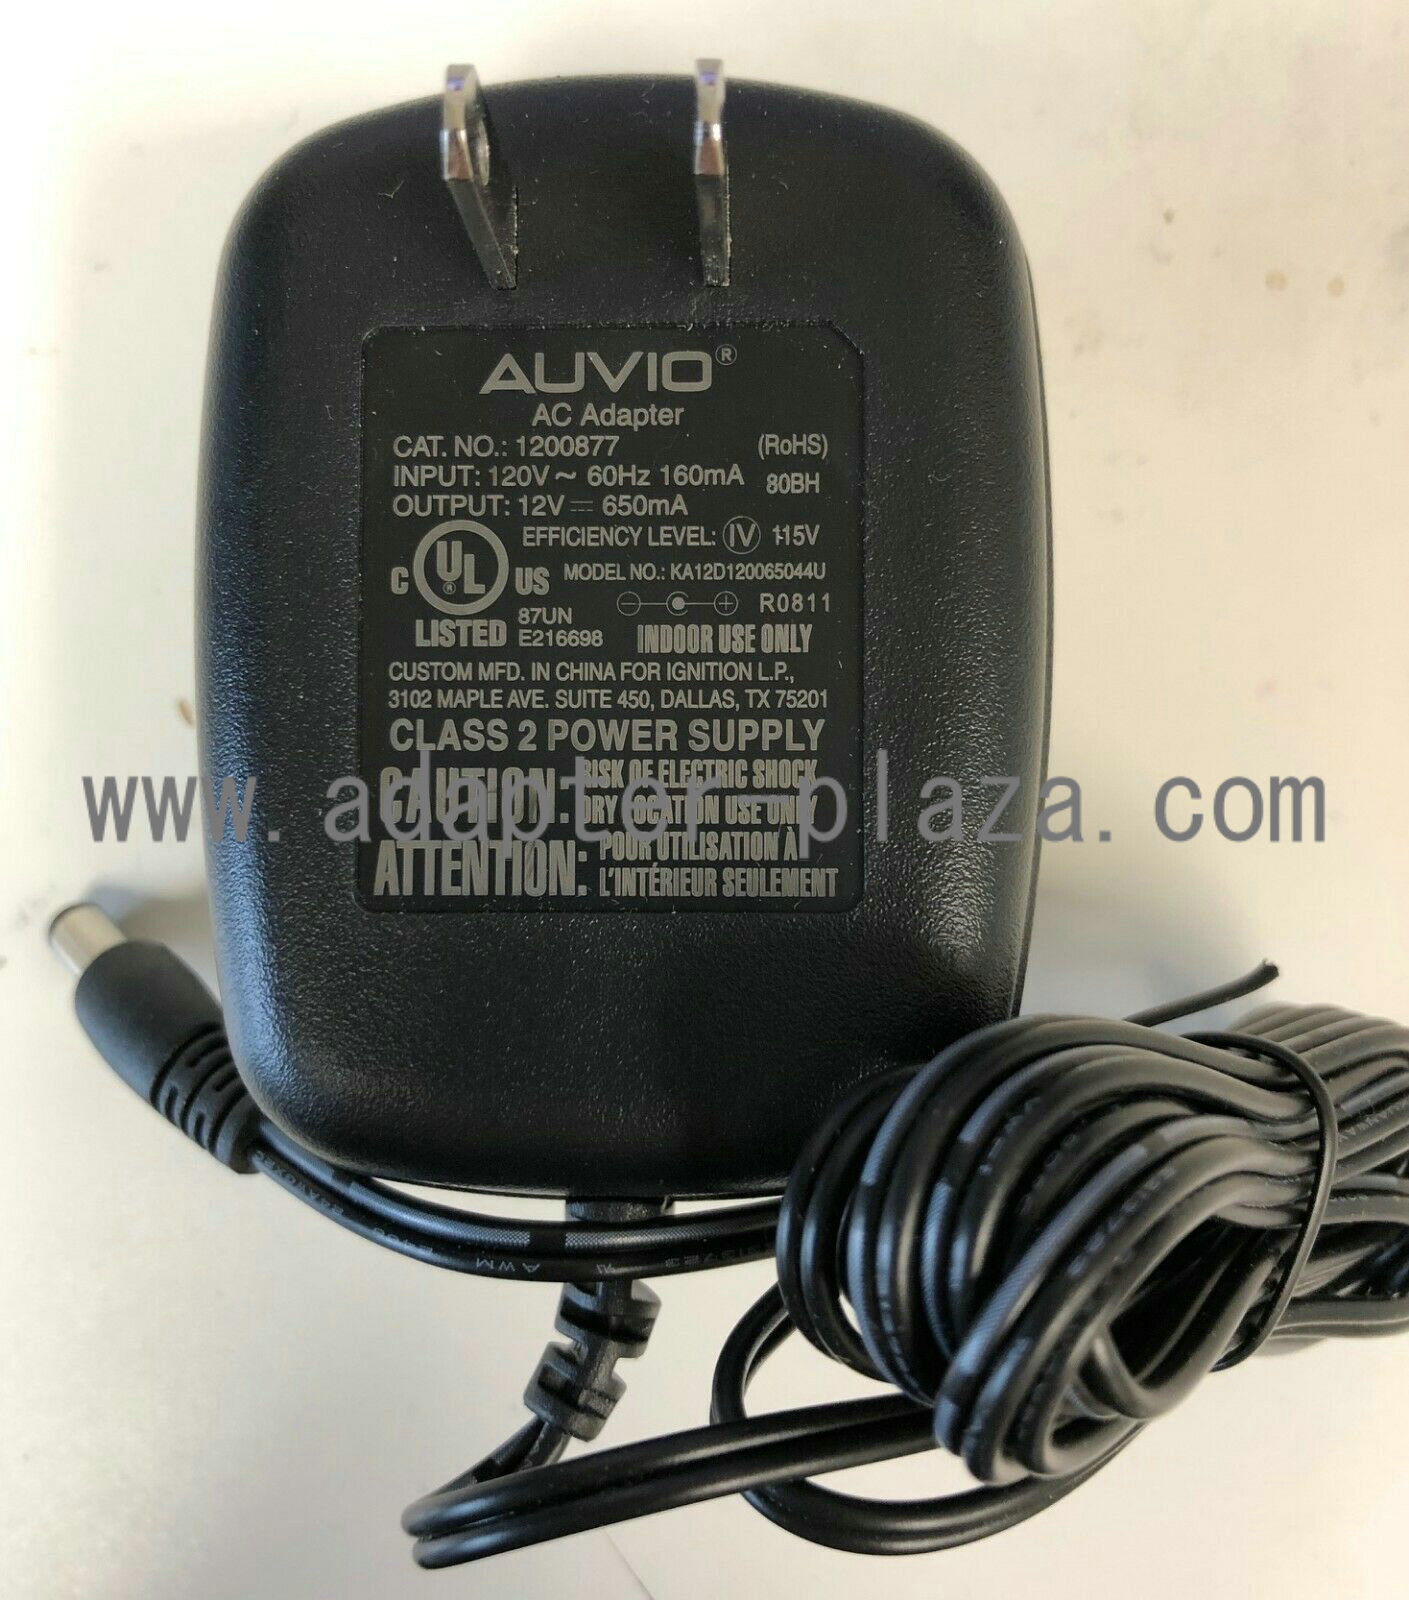 *Brand NEW* AUVIO KA12D120065044U Output 12V DC 650mA 1200877 AC DC Adapter POWER SUPPLY